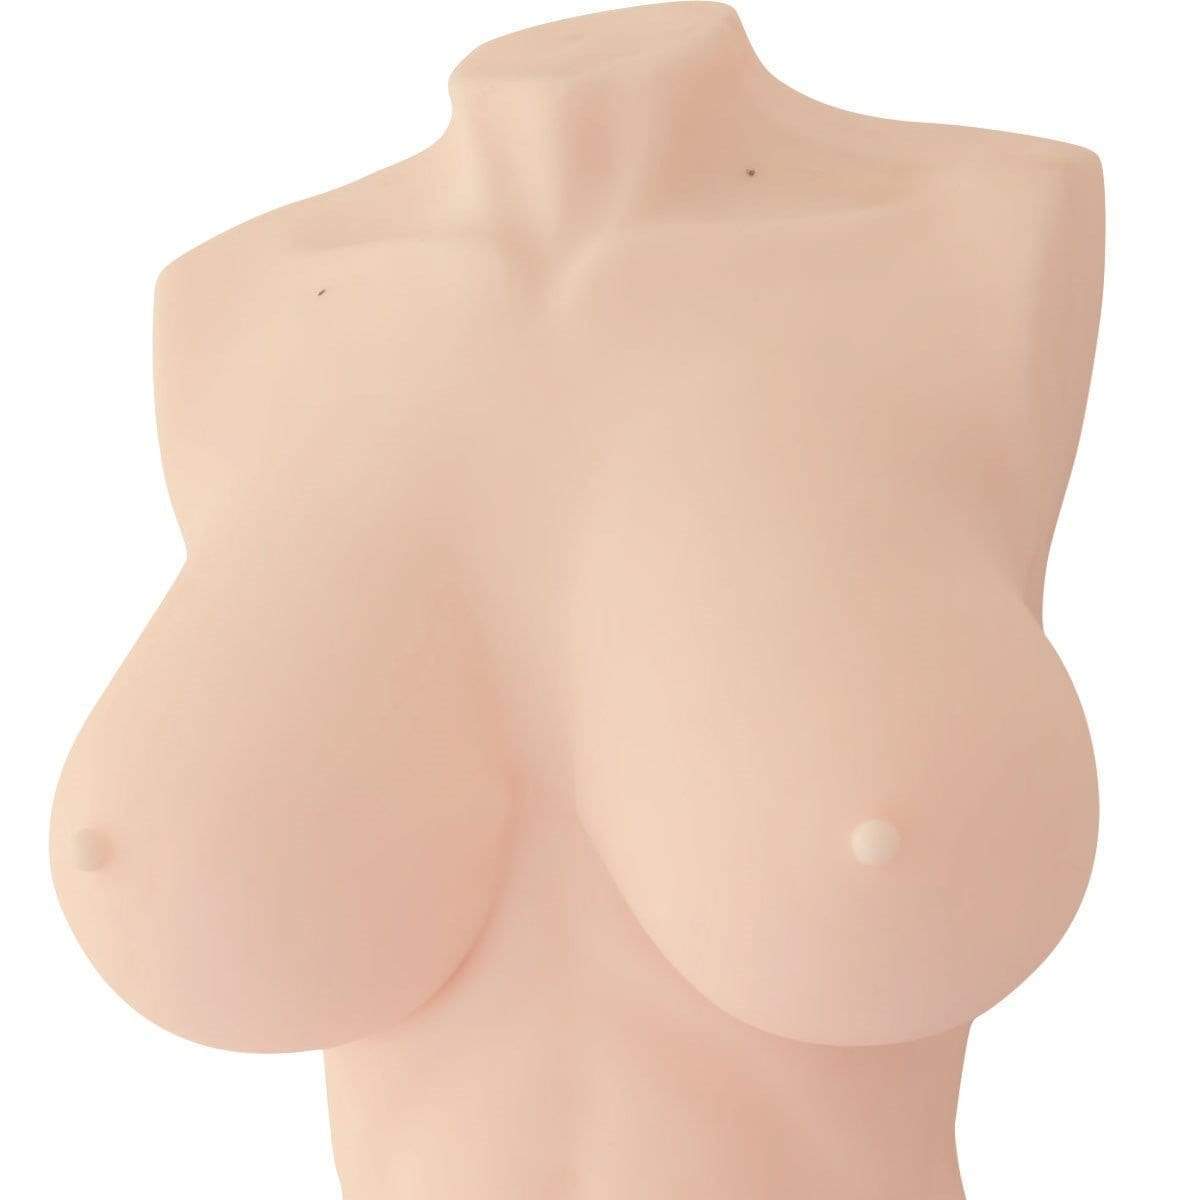 SSI Japan - Real body Julia Doll 20kg (Beige) Doll 324161318 CherryAffairs